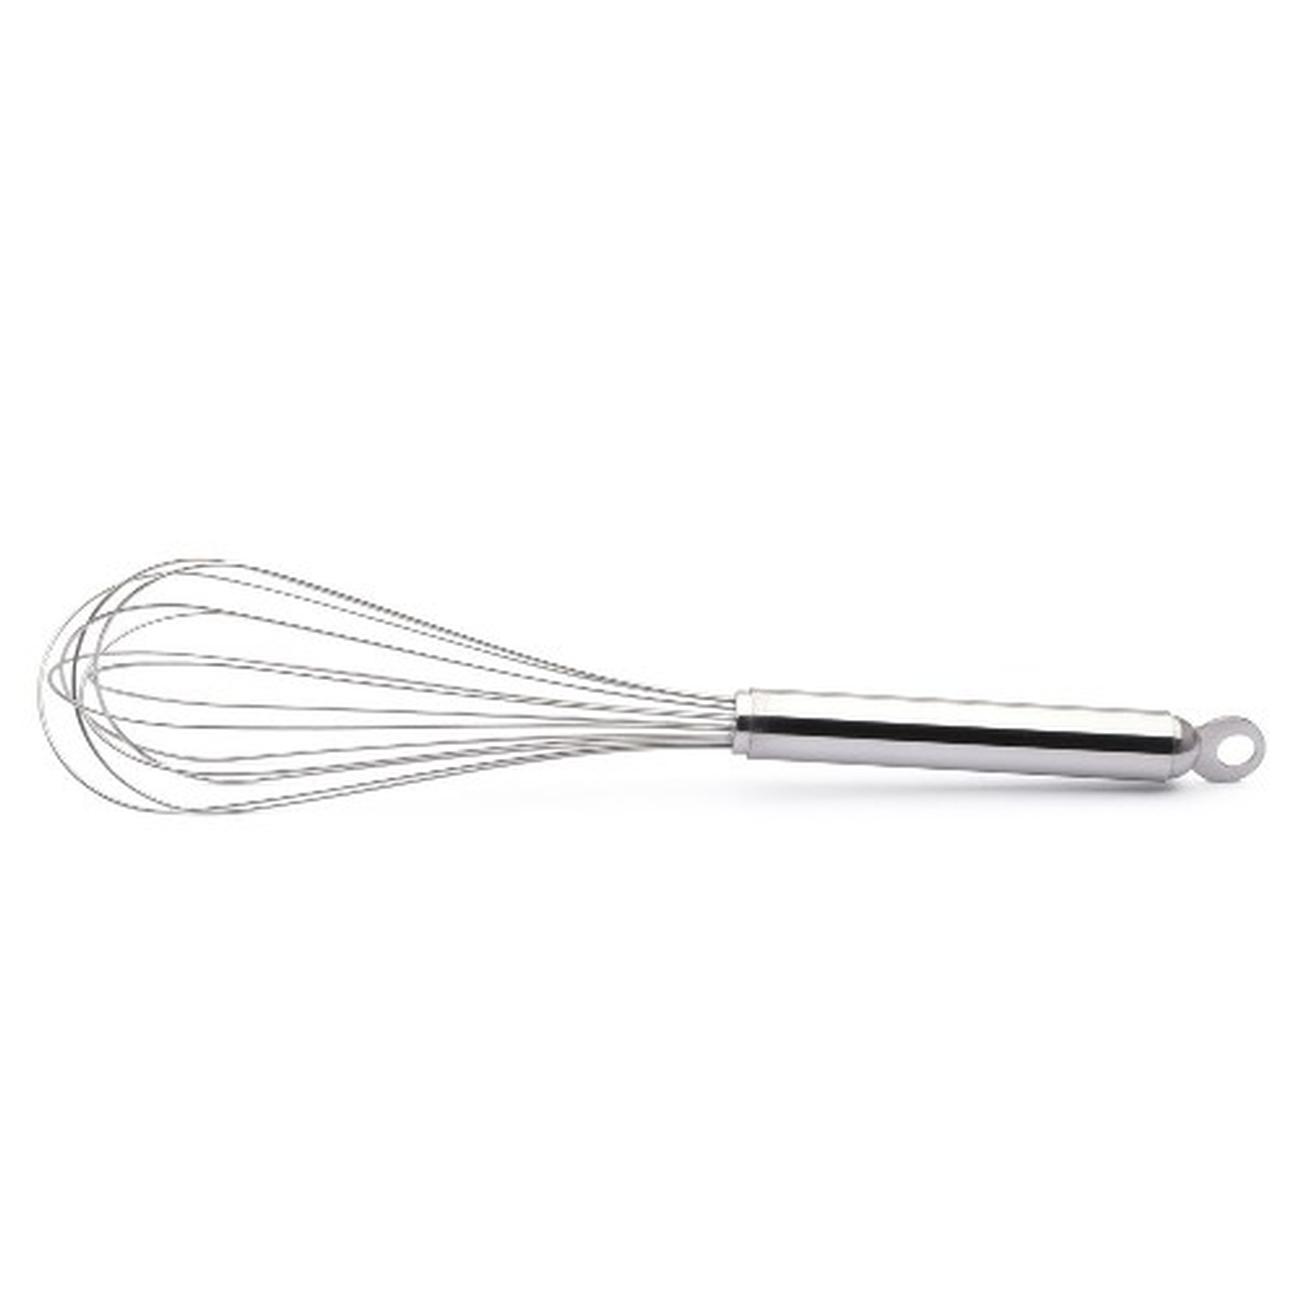 weis-stainless-steel-whisk-30cm - Kitchen Whisk 30cm